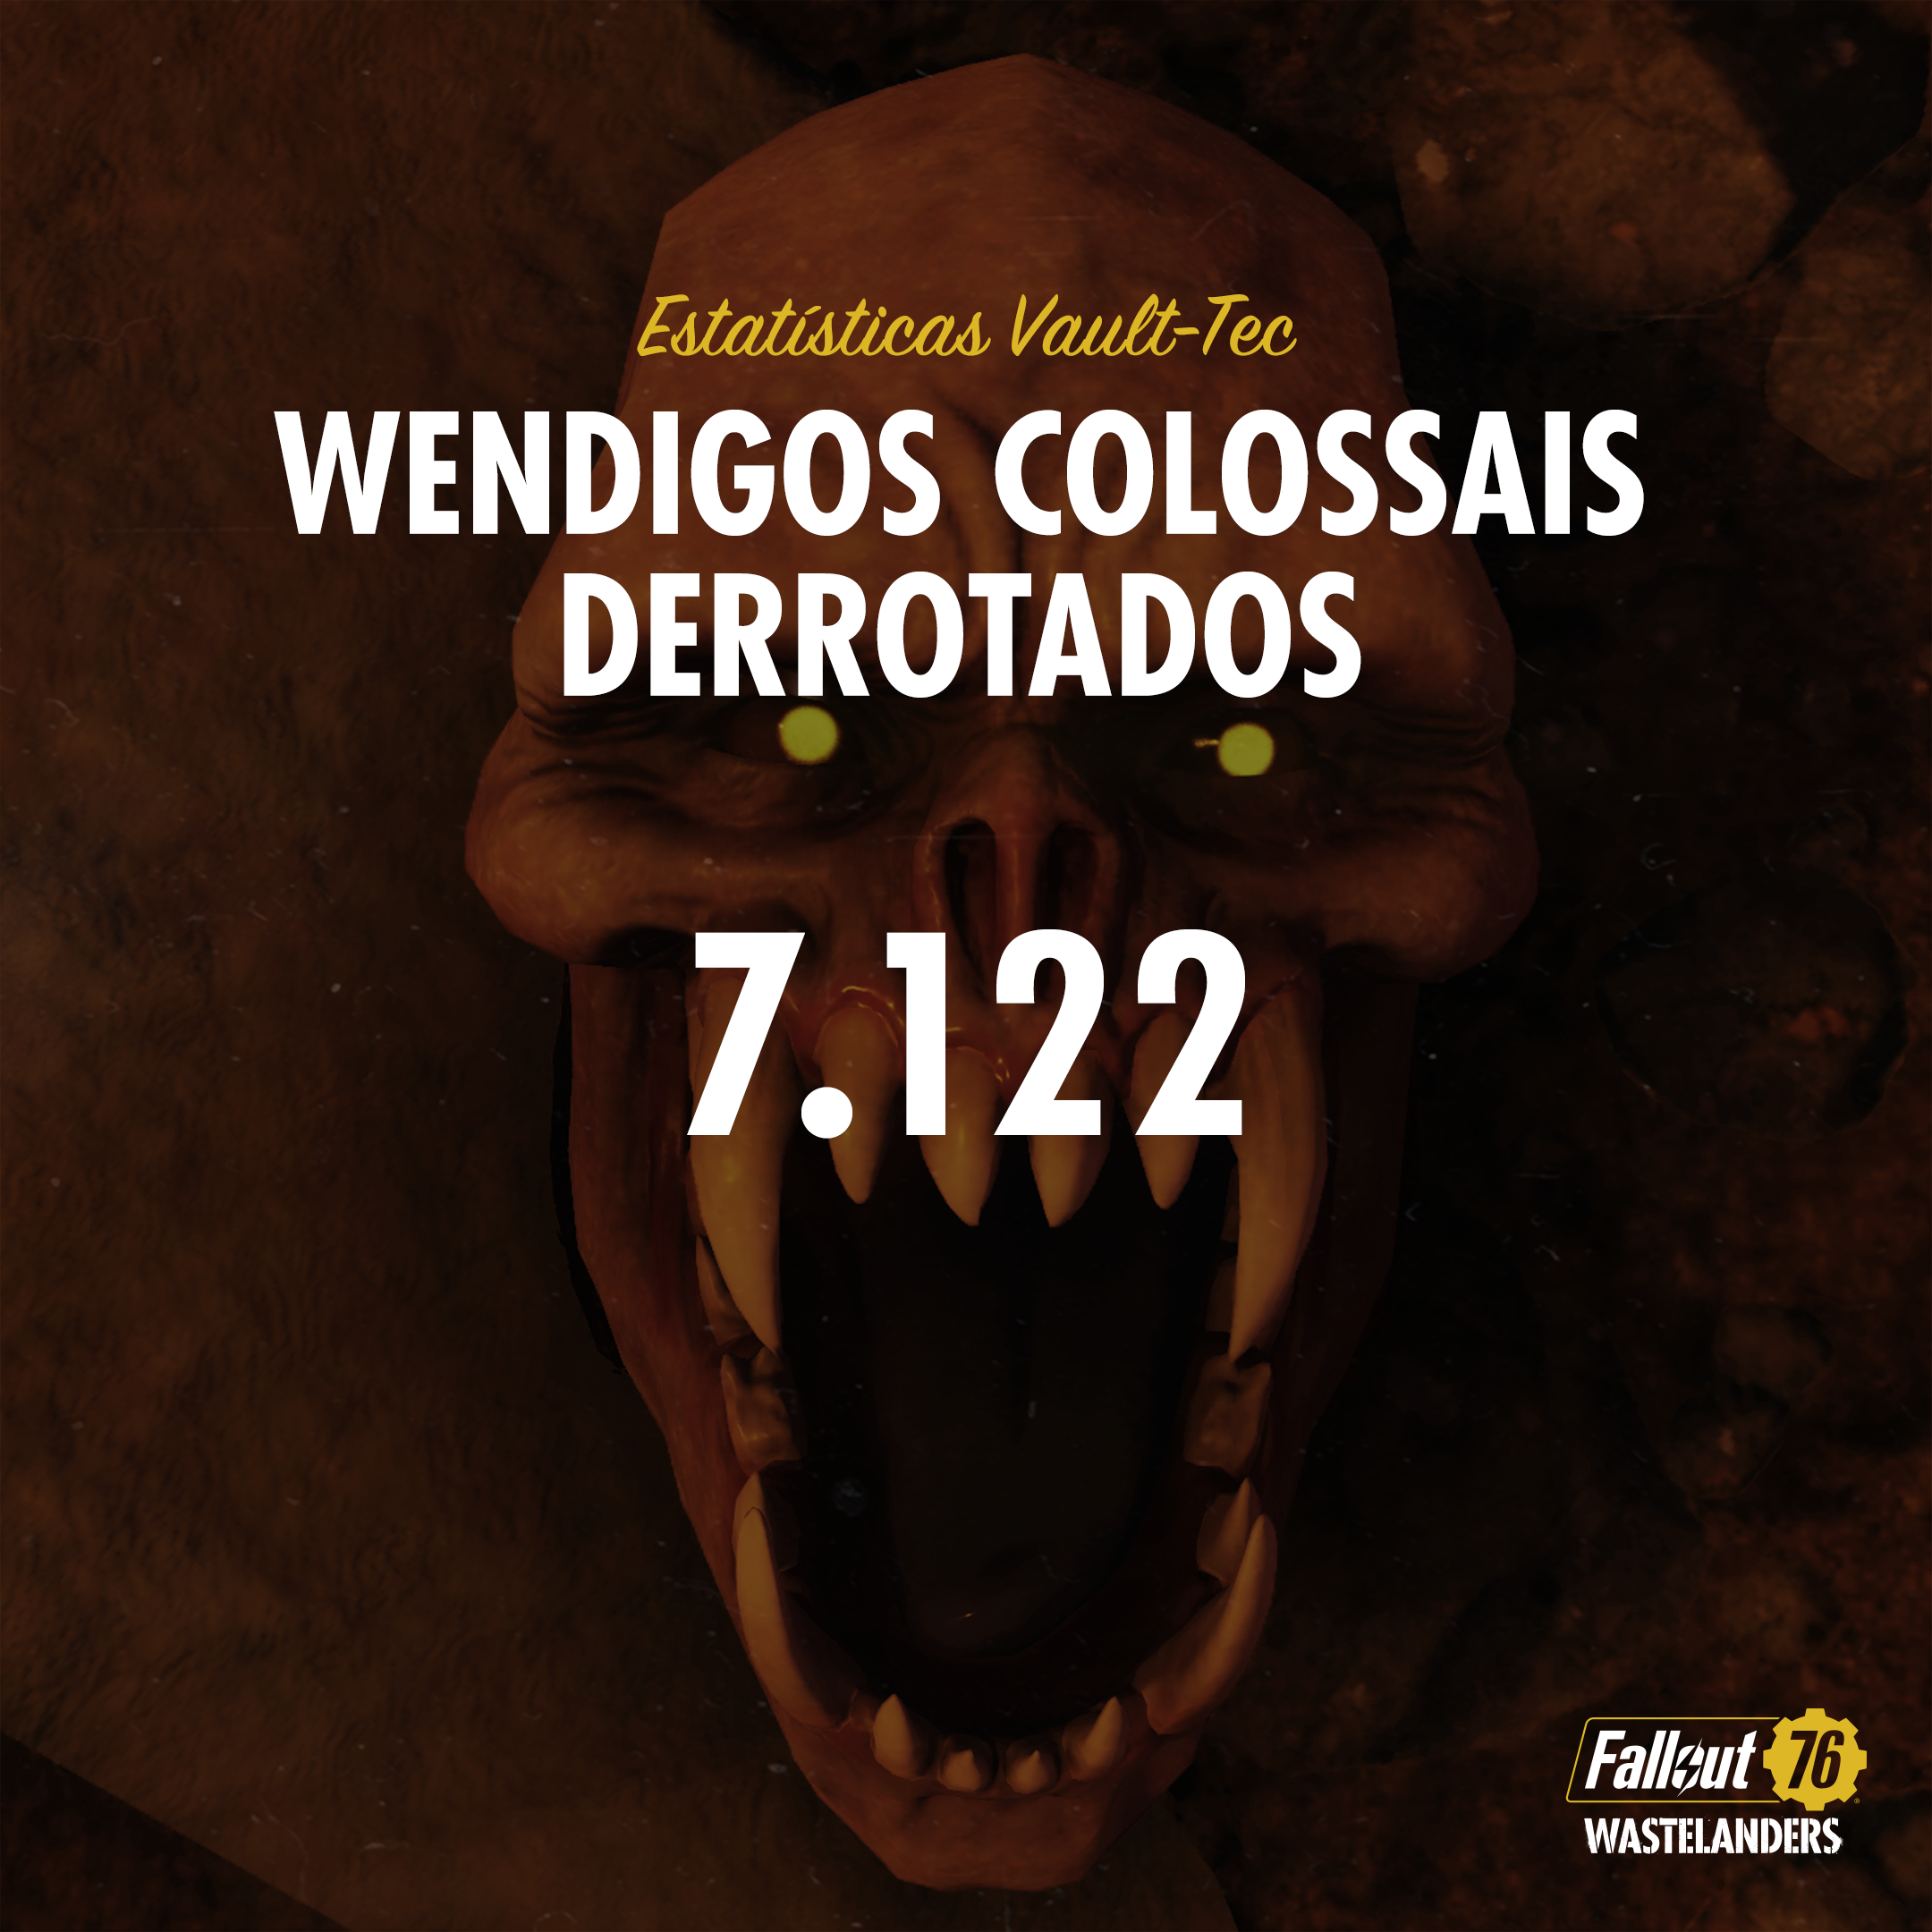 Fallout76-Wastelanders wendigocolossi-PT-BR-02